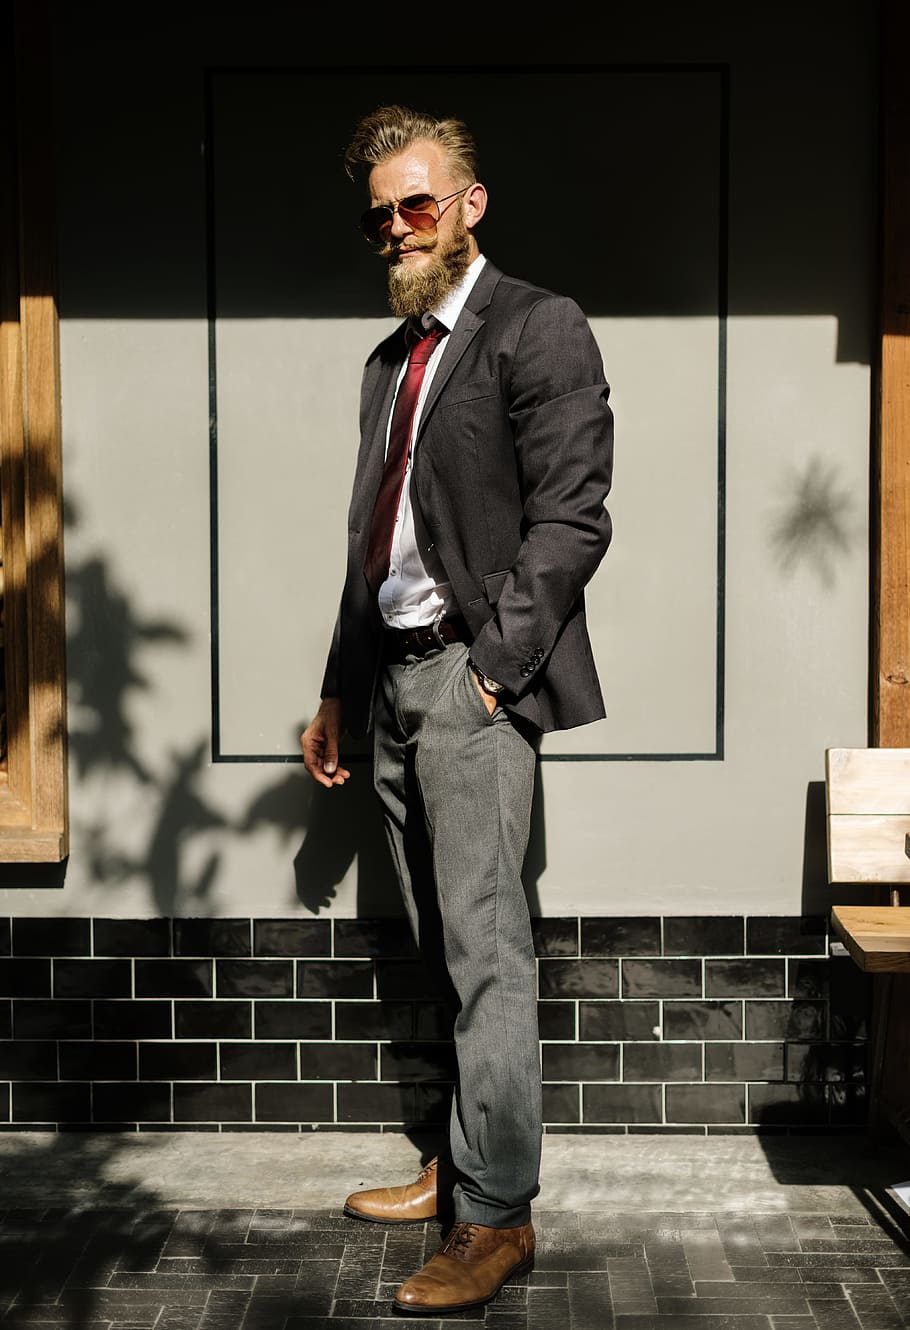 Man Standing Near the Wall, adult, beard, business, designer suit